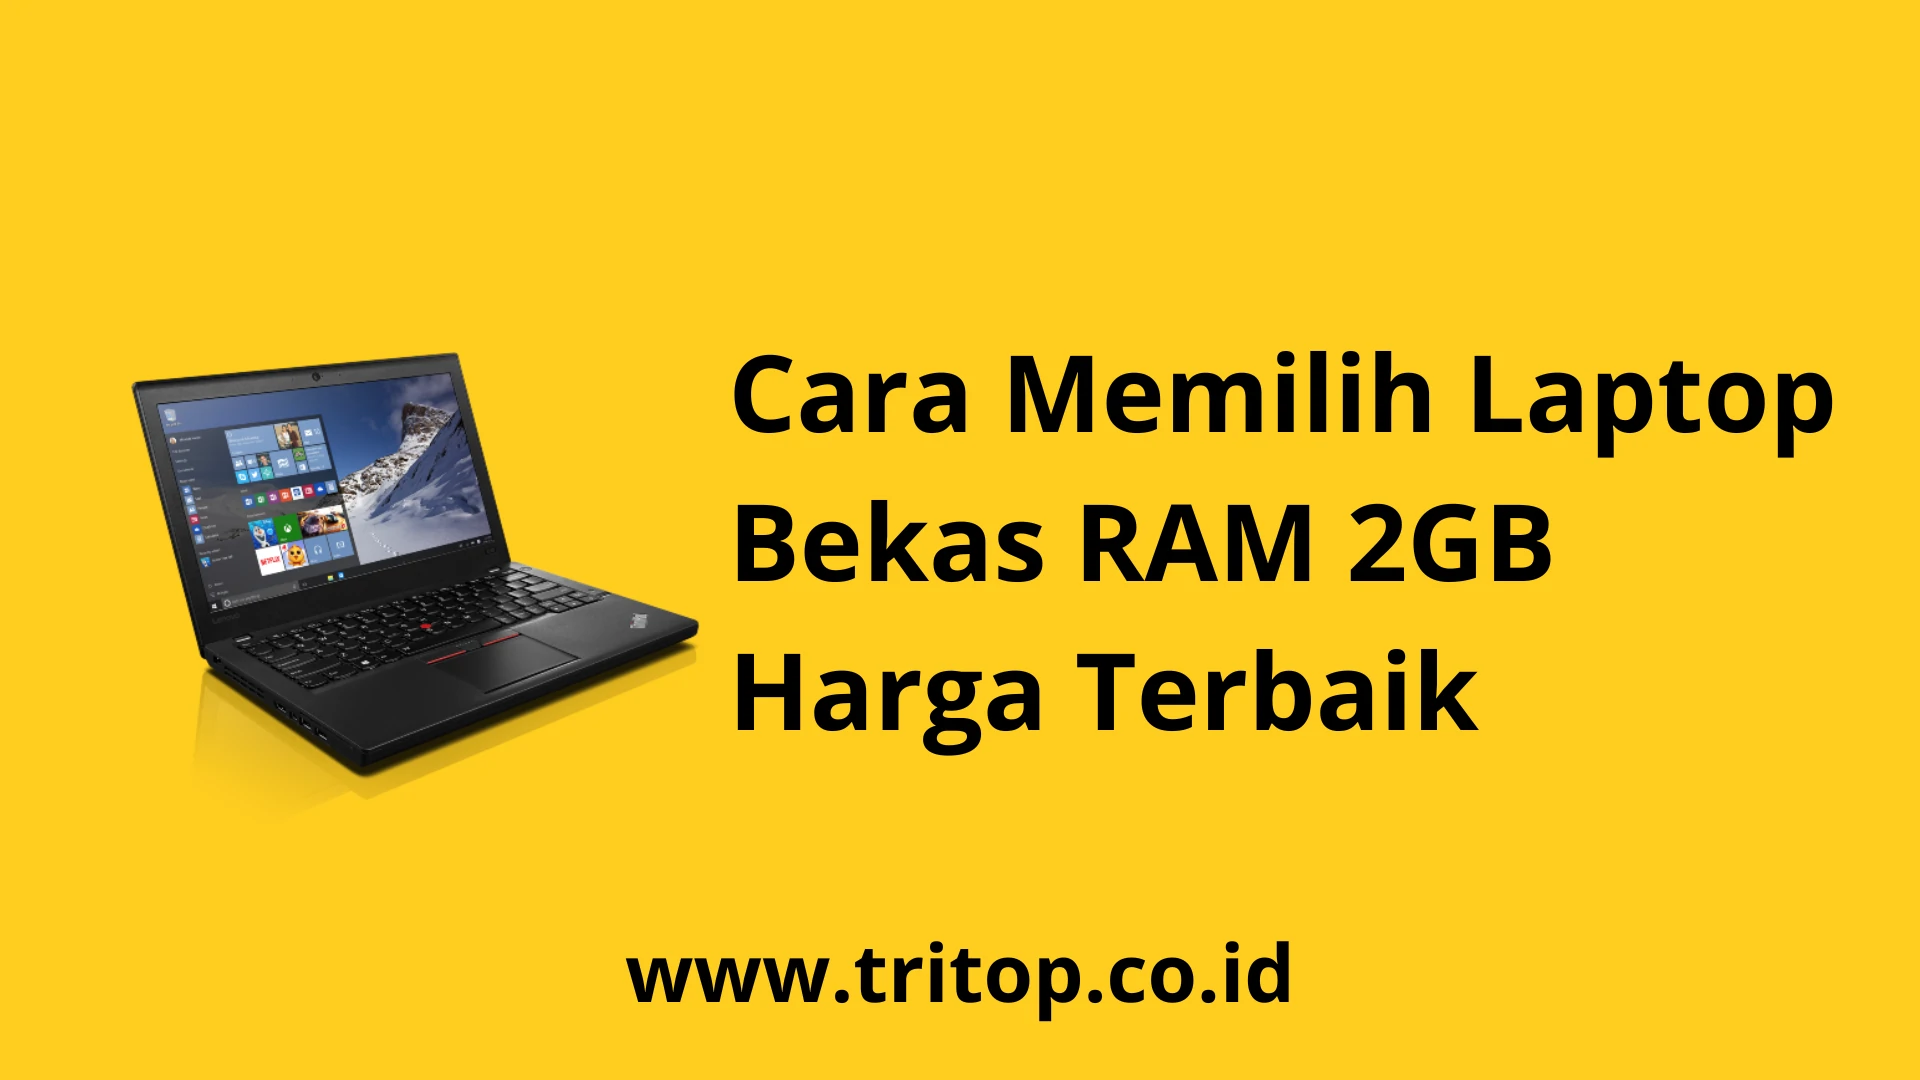 Harga Laptop Bekas RAM 2GB www.tritop.co.id